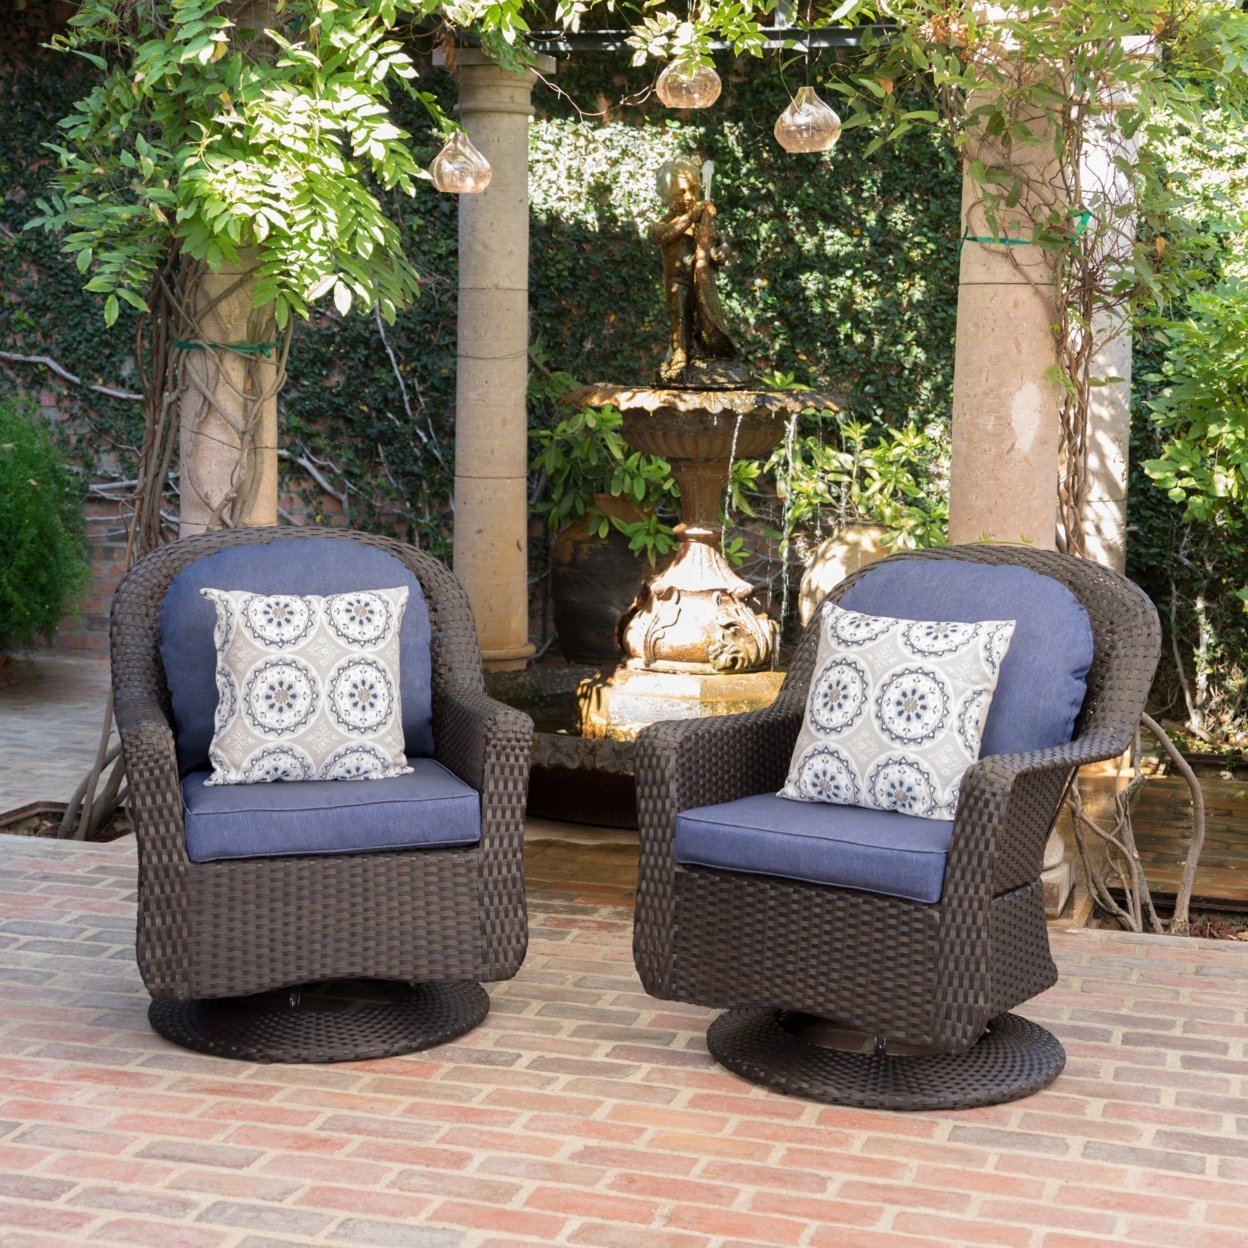 Linsten Outdoor Wicker Swivel Club Chairs With Water Resistant Cushion - Set Of 2, Dark Brown Wicker